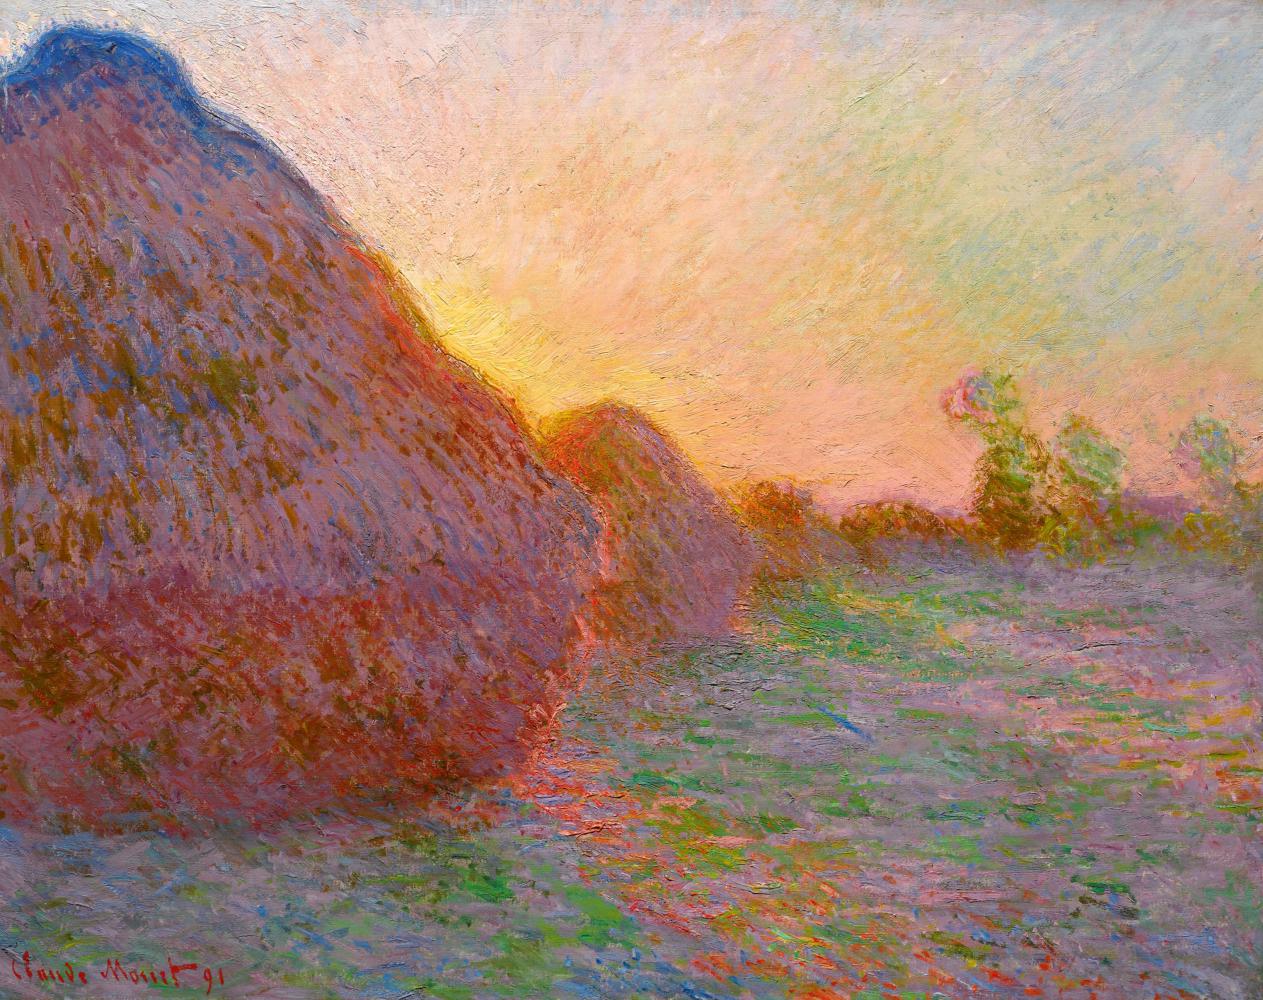 Claude Monet "Meules", 1890